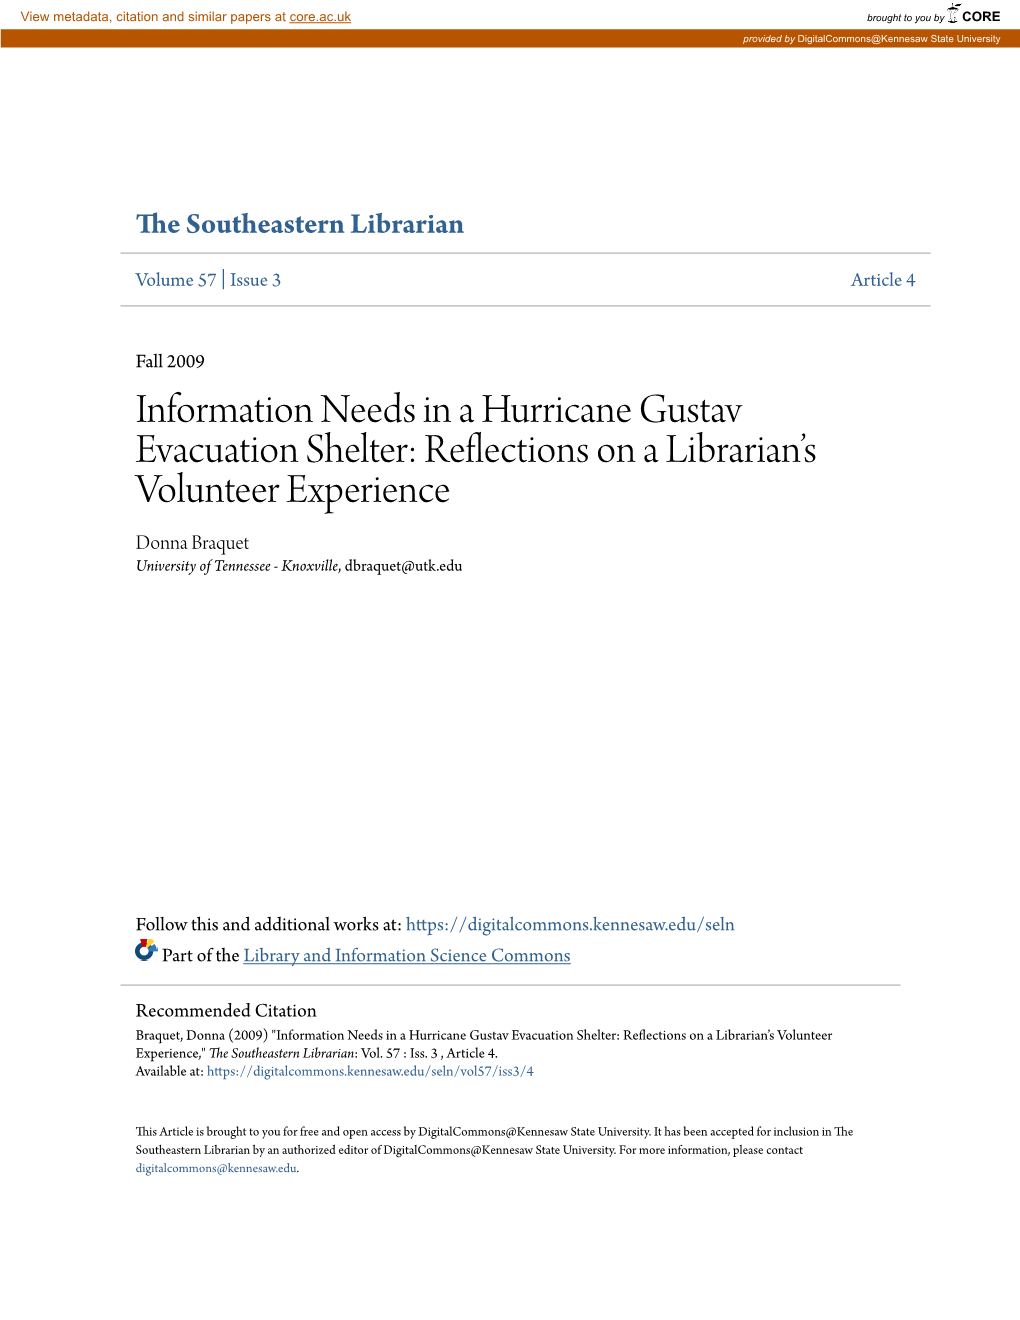 Information Needs in a Hurricane Gustav Evacuation Shelter